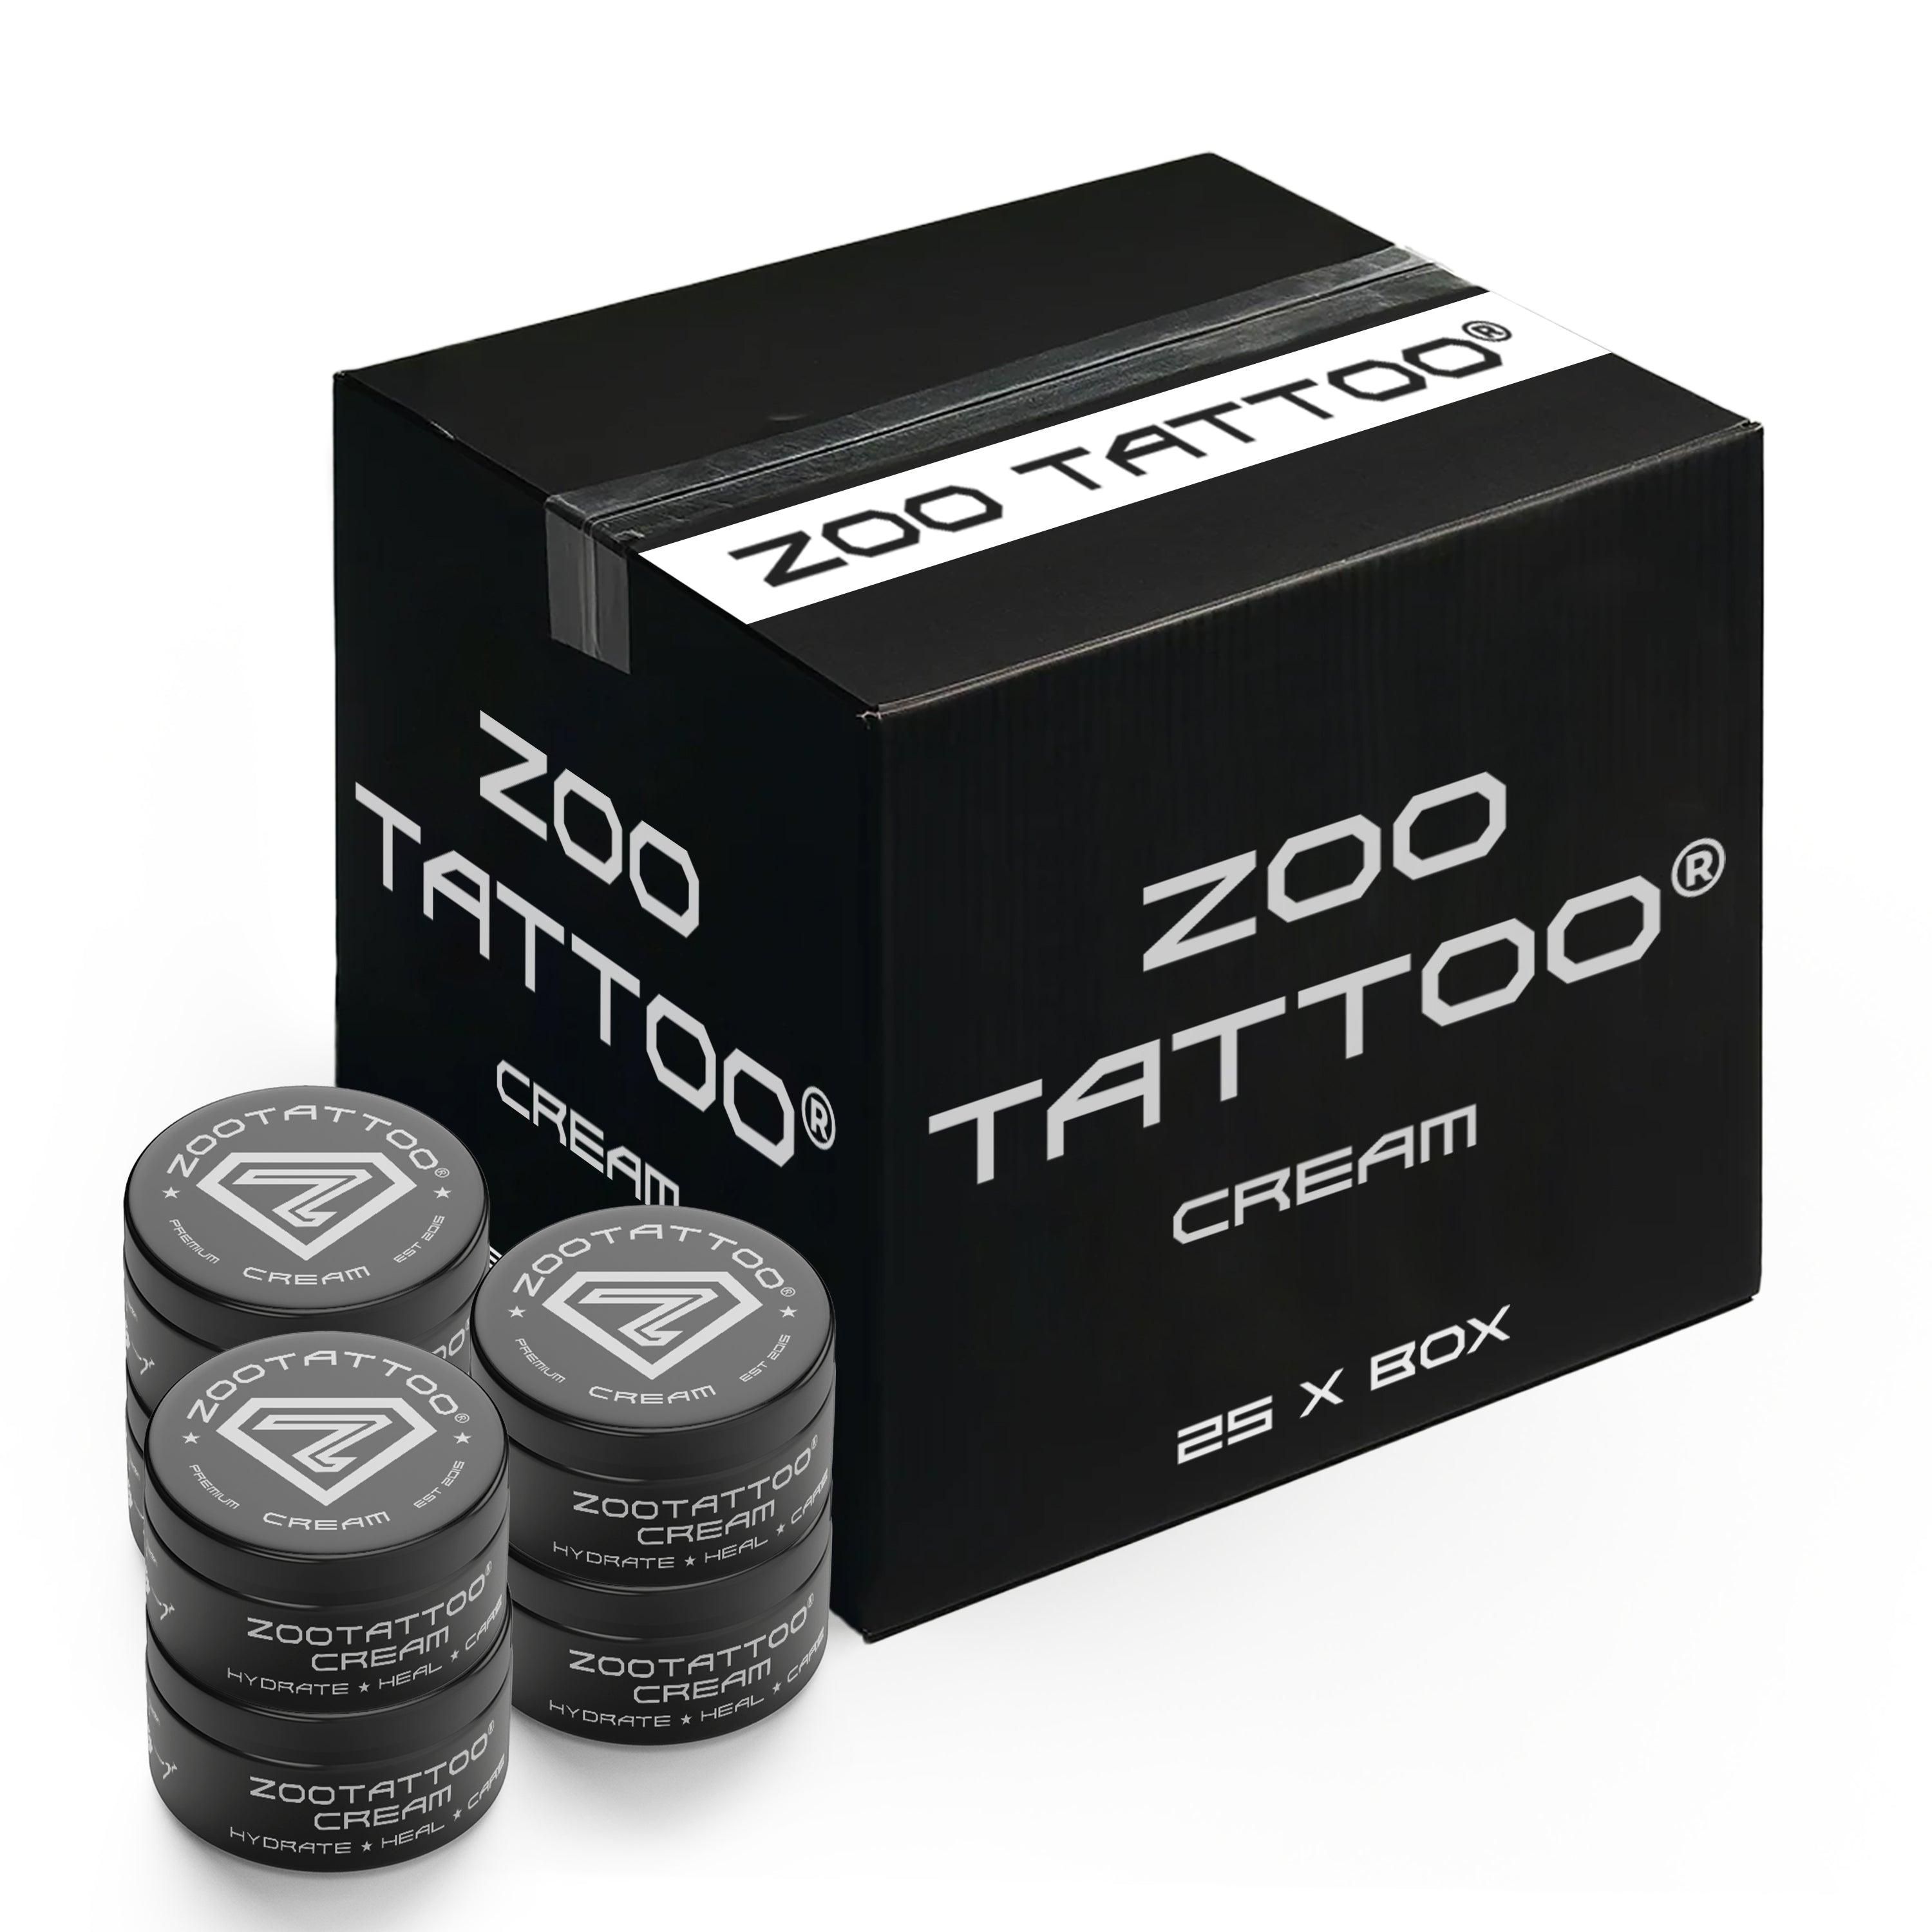 ZOOTATTOO® Cream 100ml Wholesale 25 Box